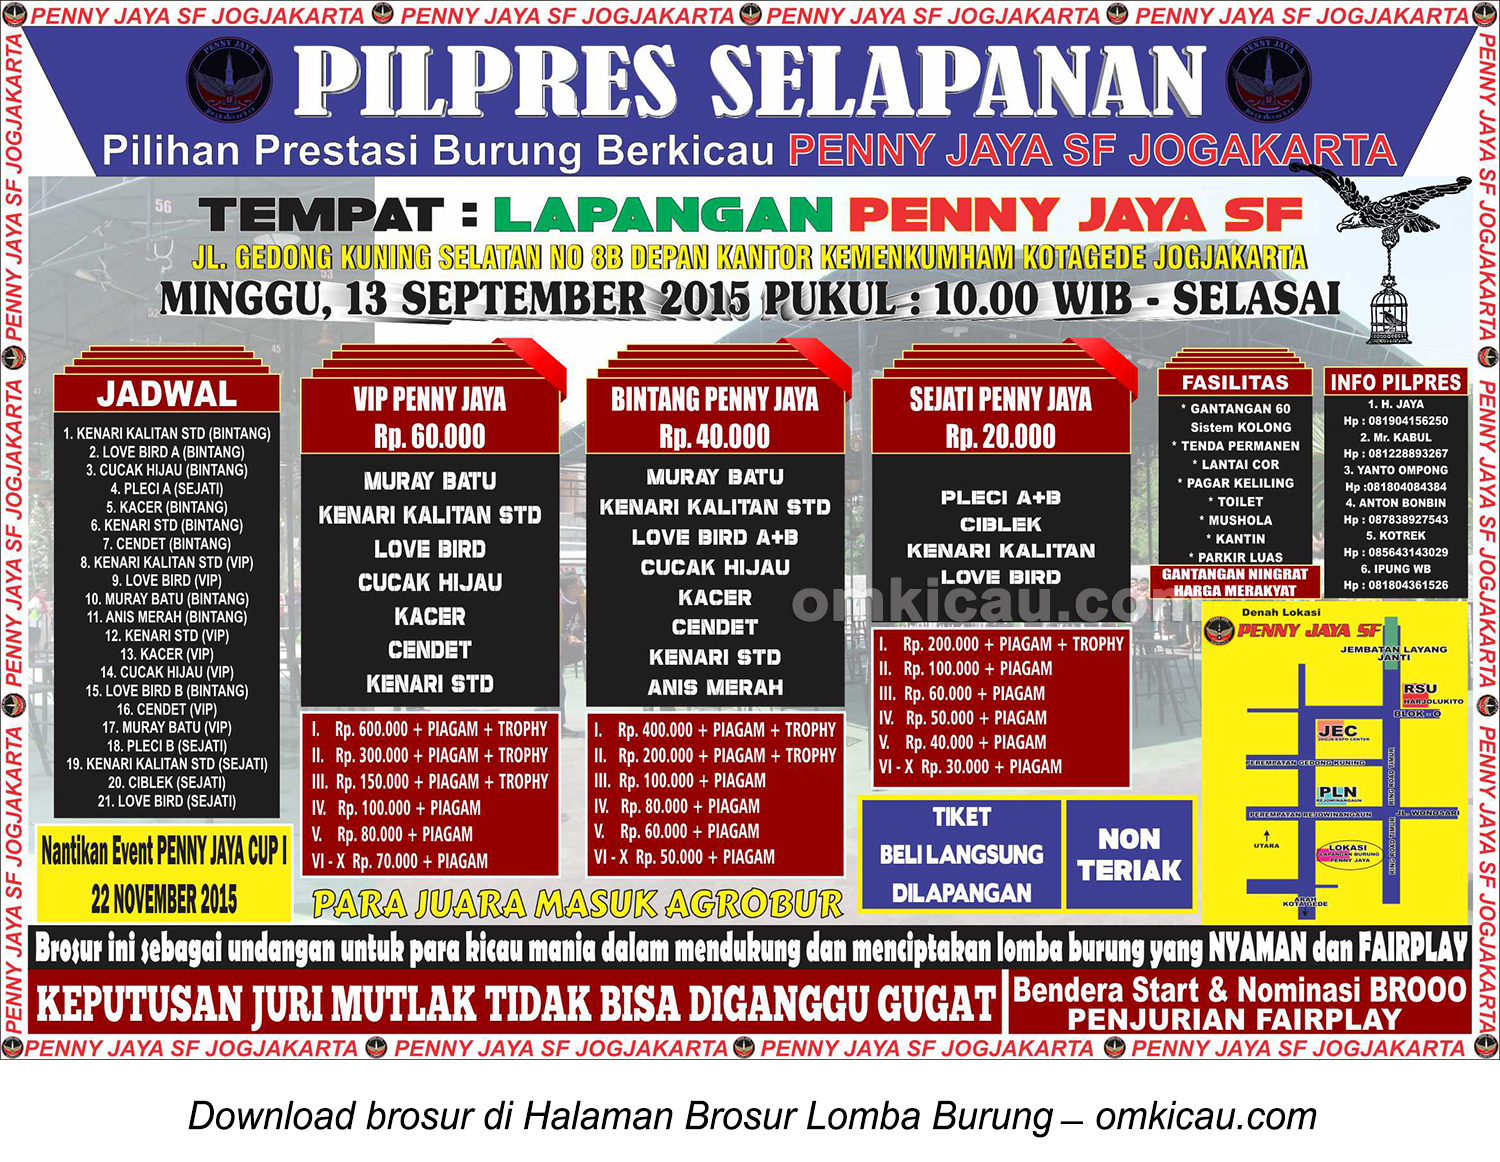 Brosur Pilpres Selapanan Penny Jaya SF Jogja, 13 September 2015